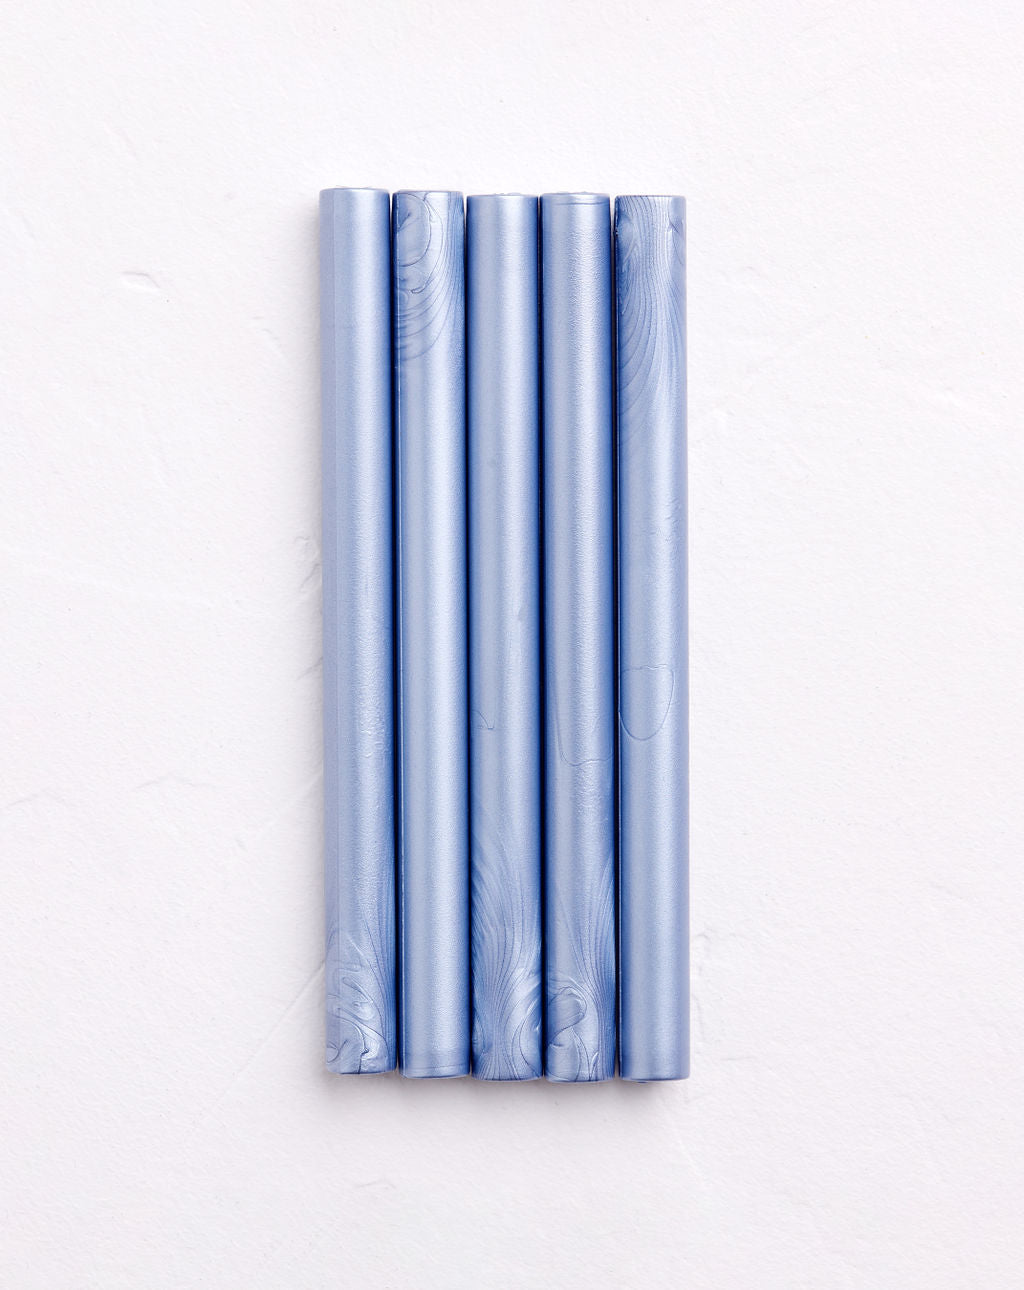 Dusty Blue Wax Seal Stick (Pearl)